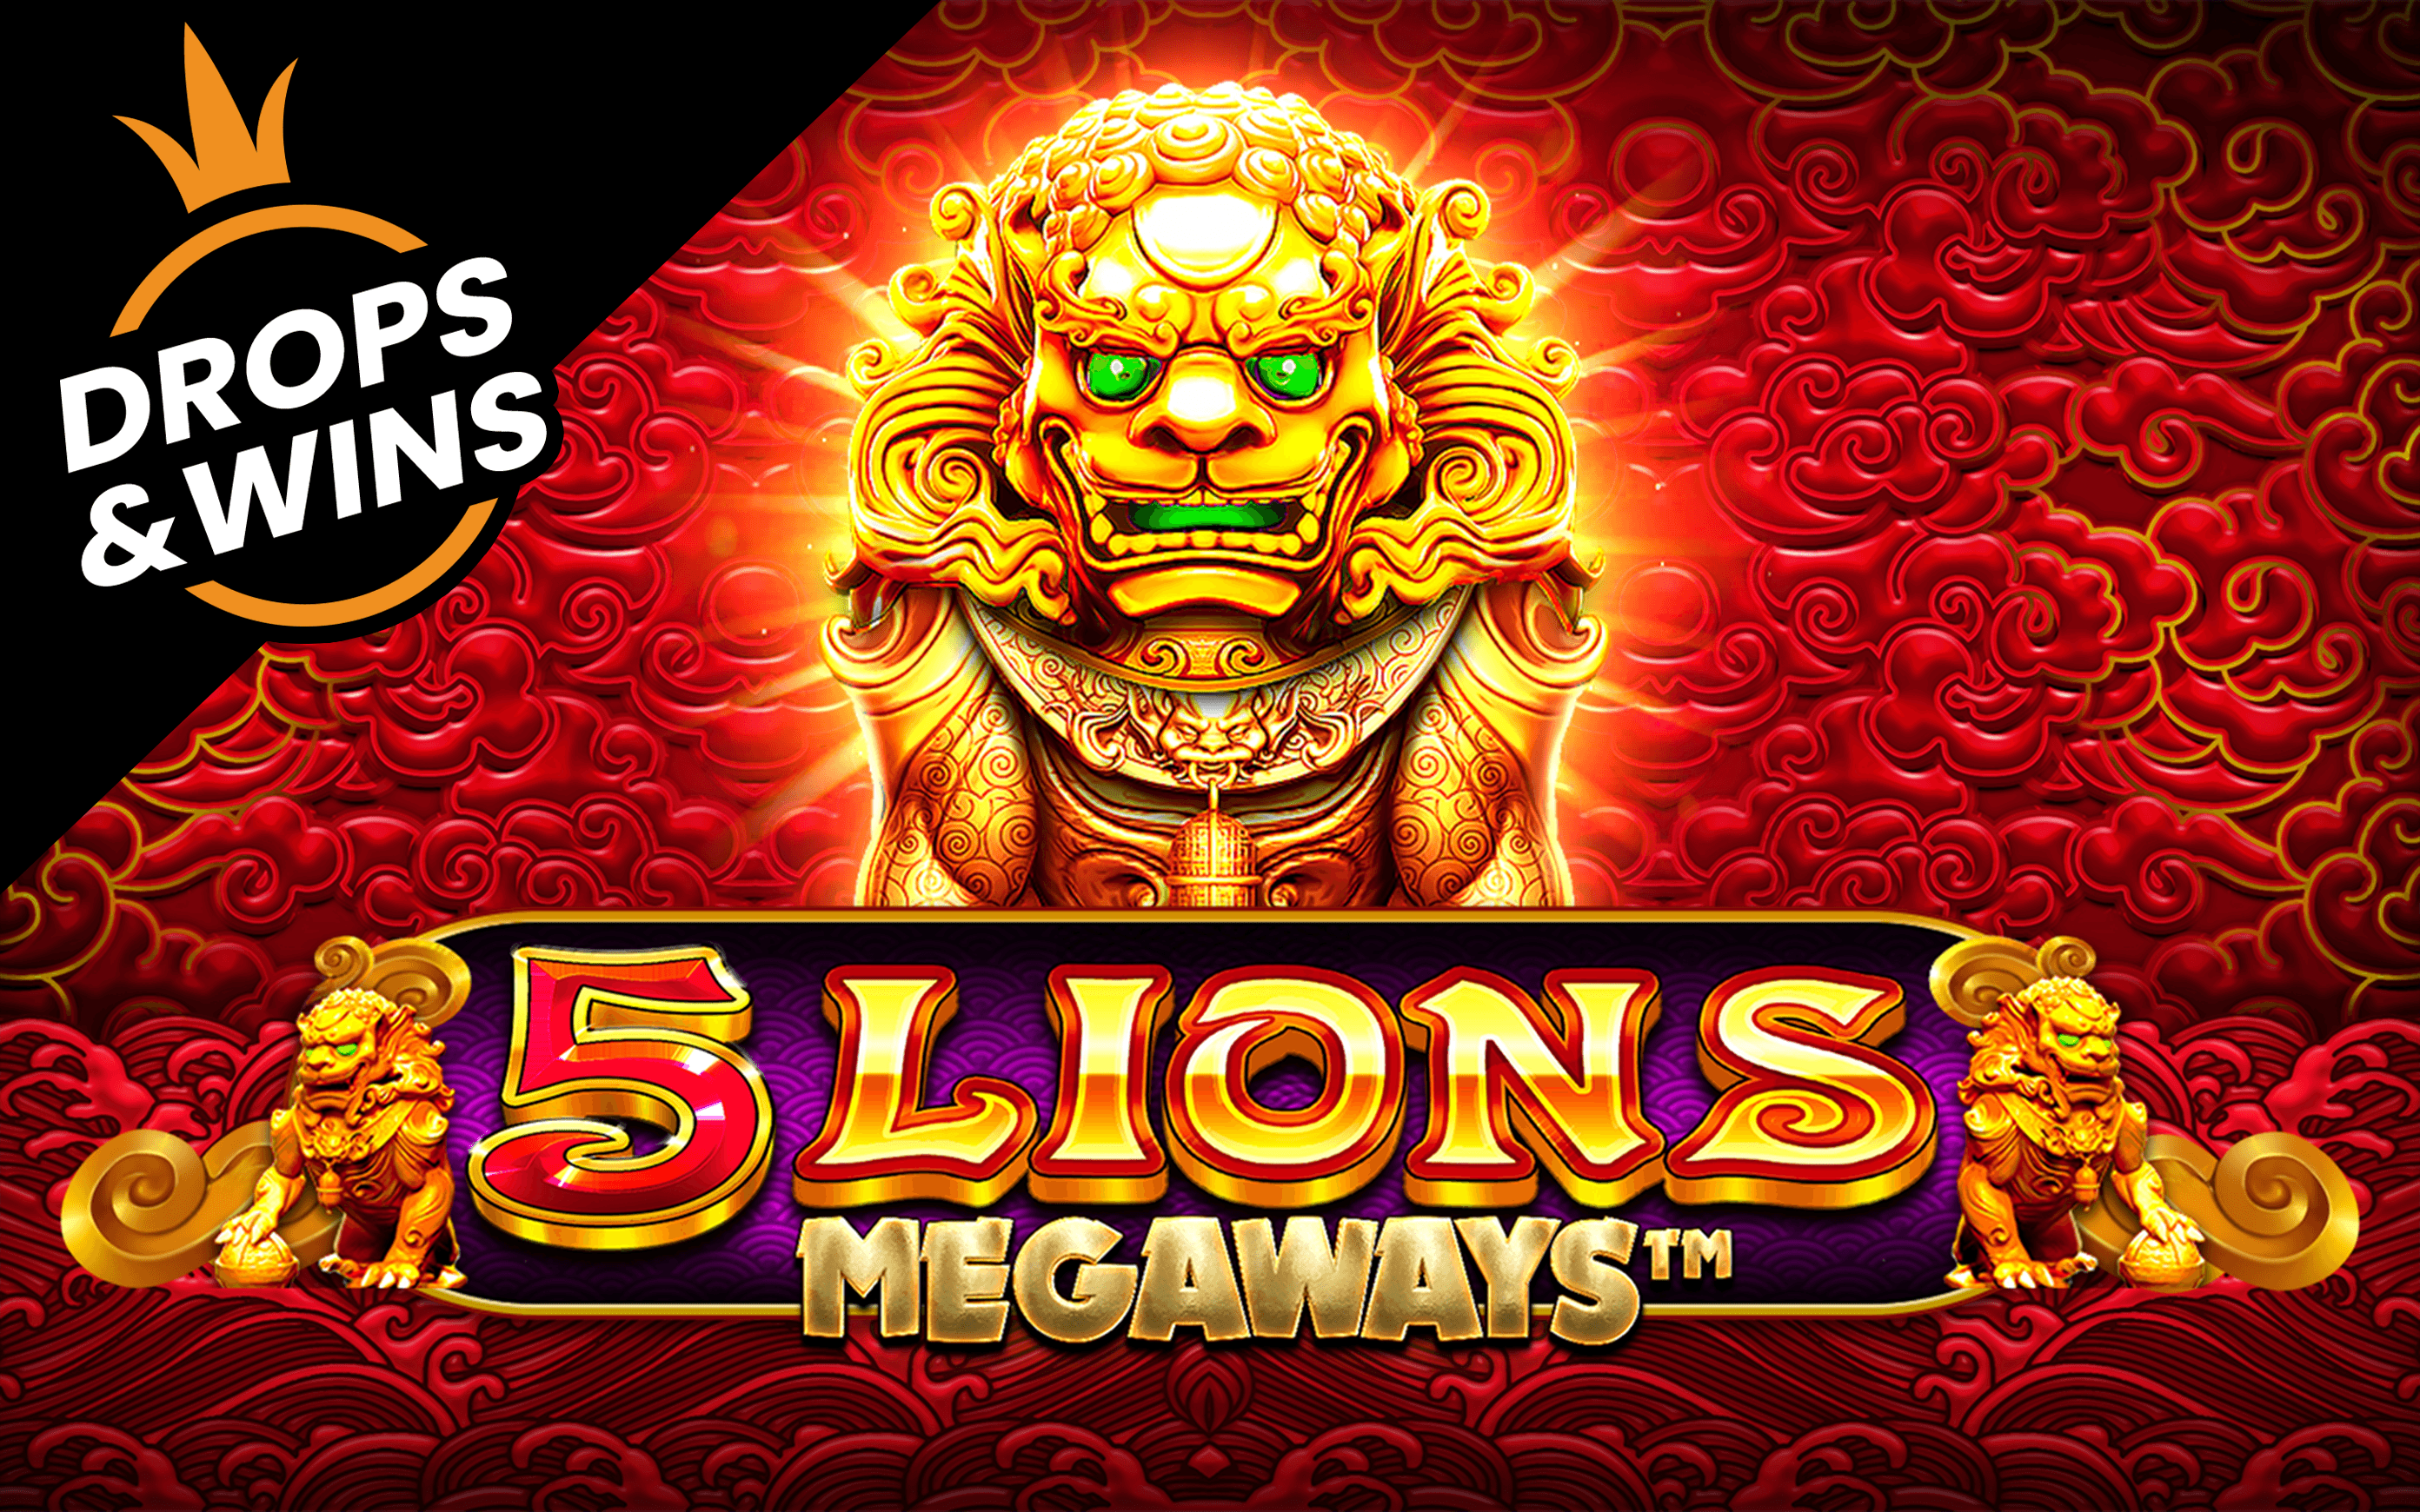 Gioca a 5 Lions Megaways™ sul casino online Starcasino.be